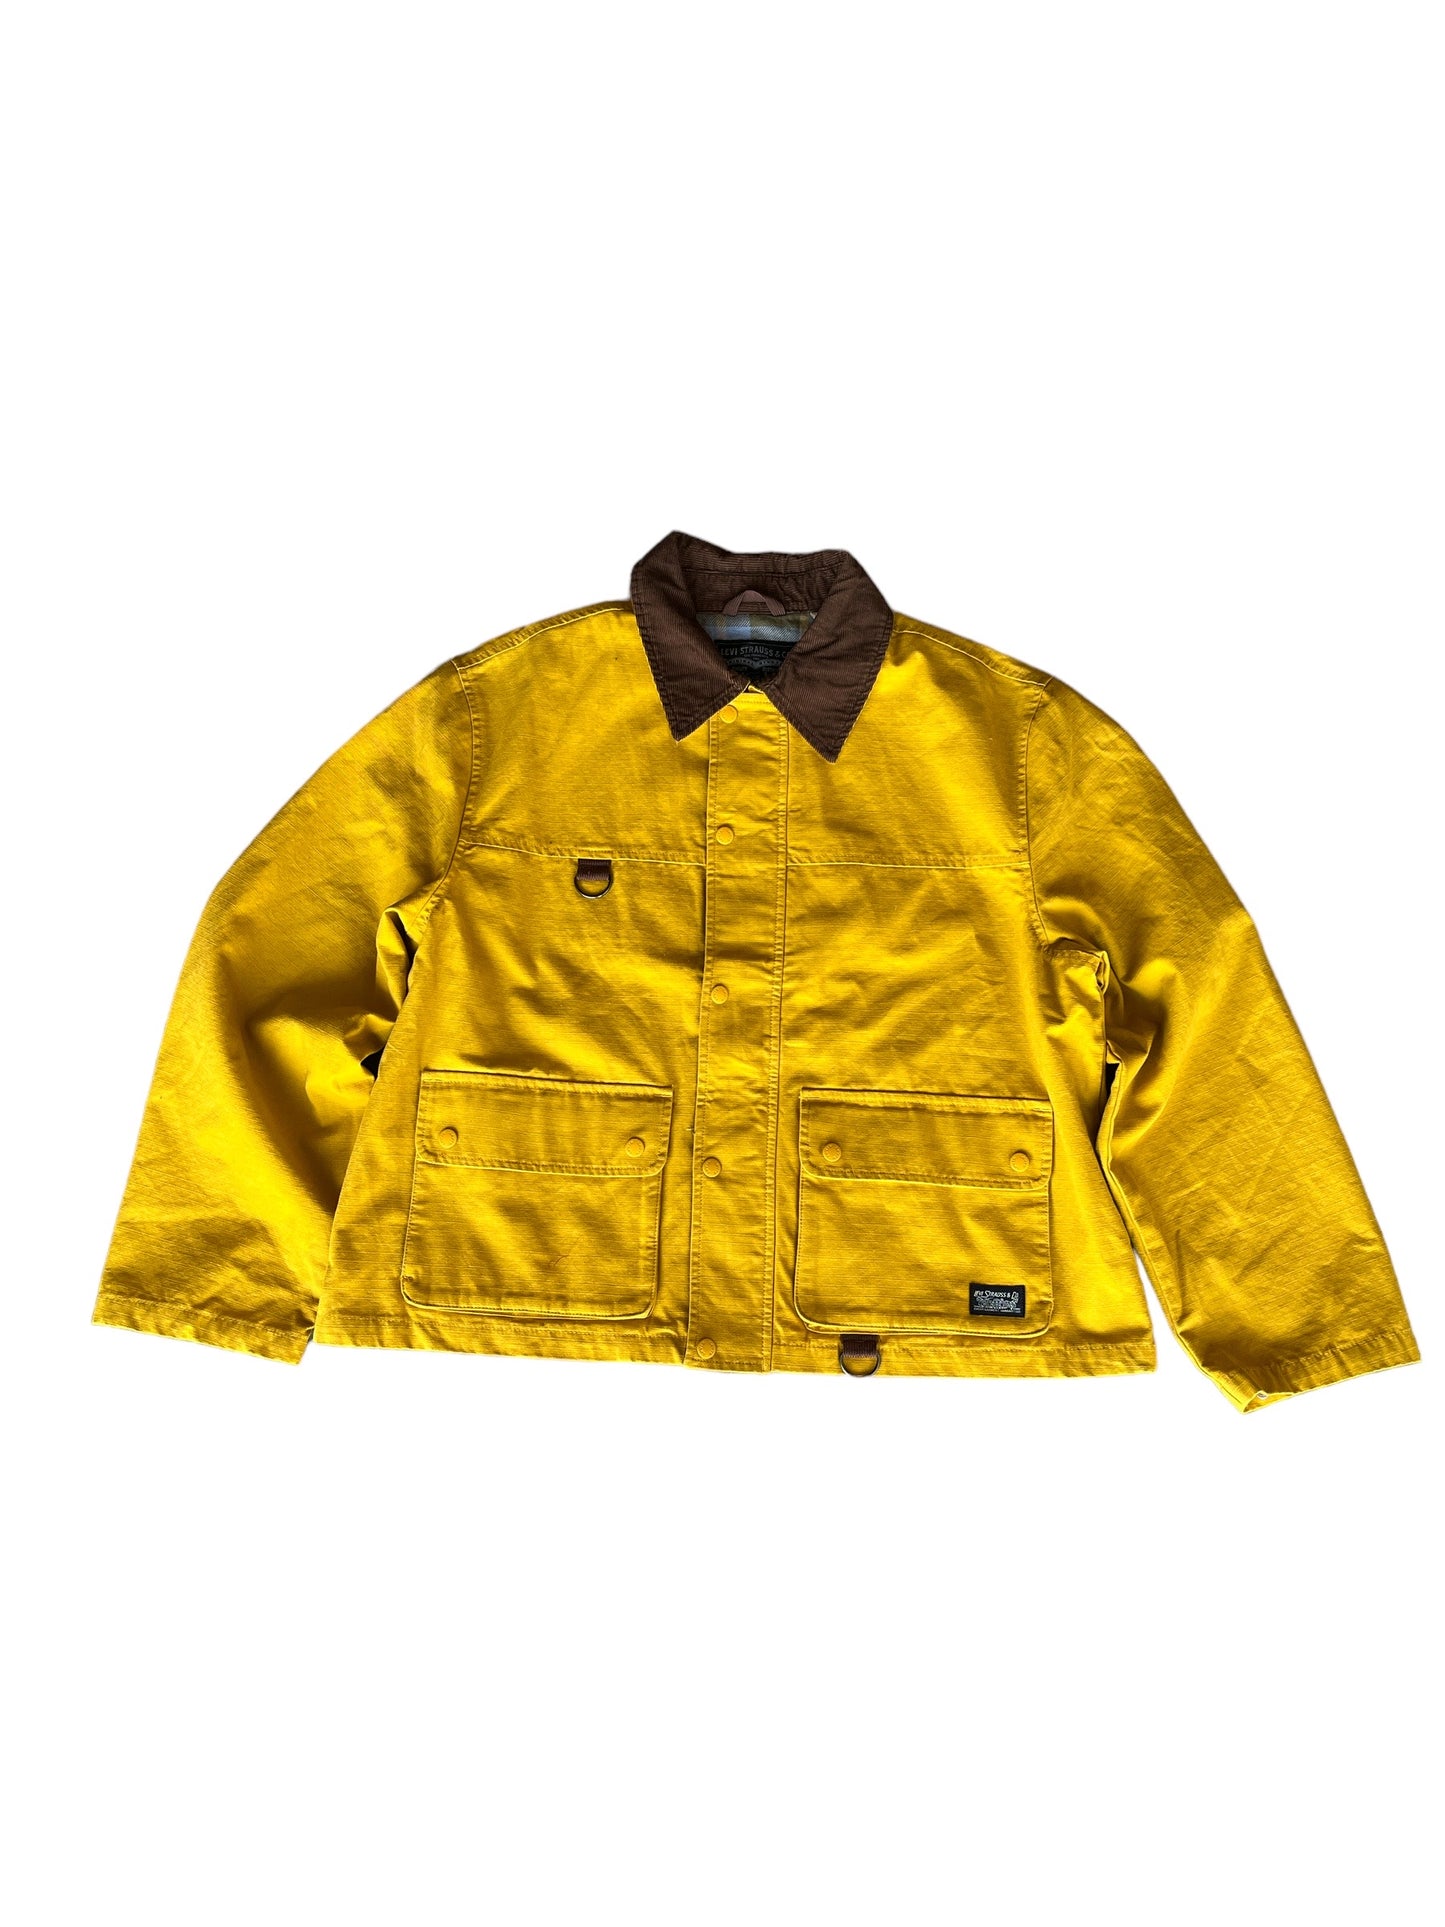 Levi's Fisherman Jacket Mustard Yellow